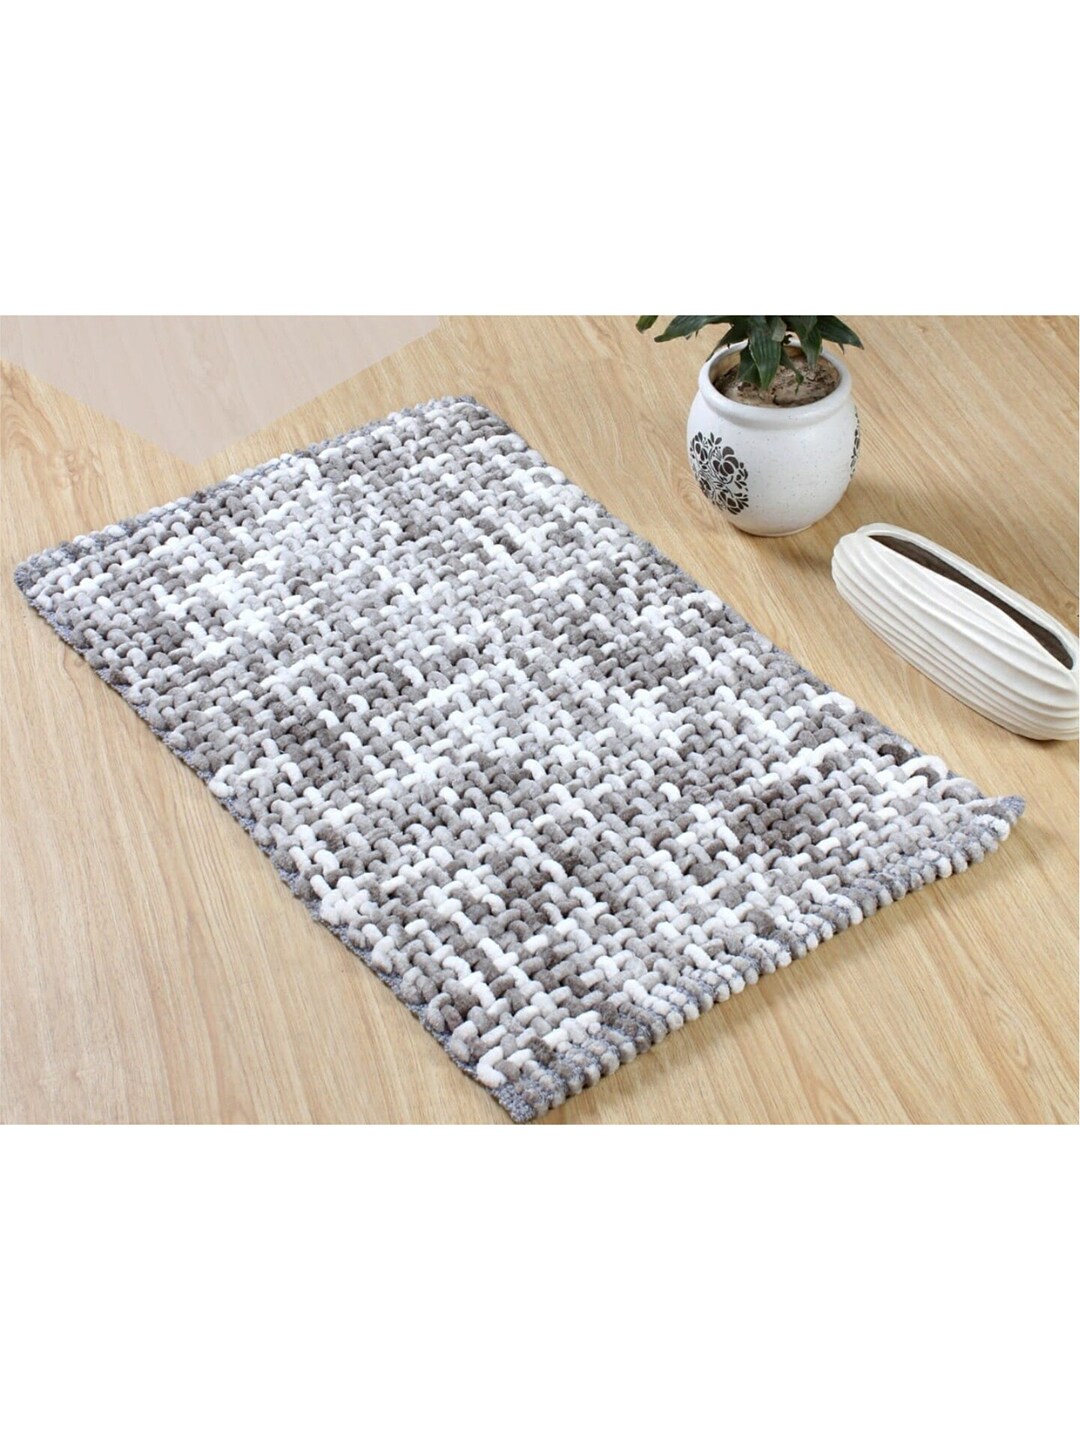 URBAN SPACE Grey & White Printed Pure Cotton Anti-Skid Doormat Price in India